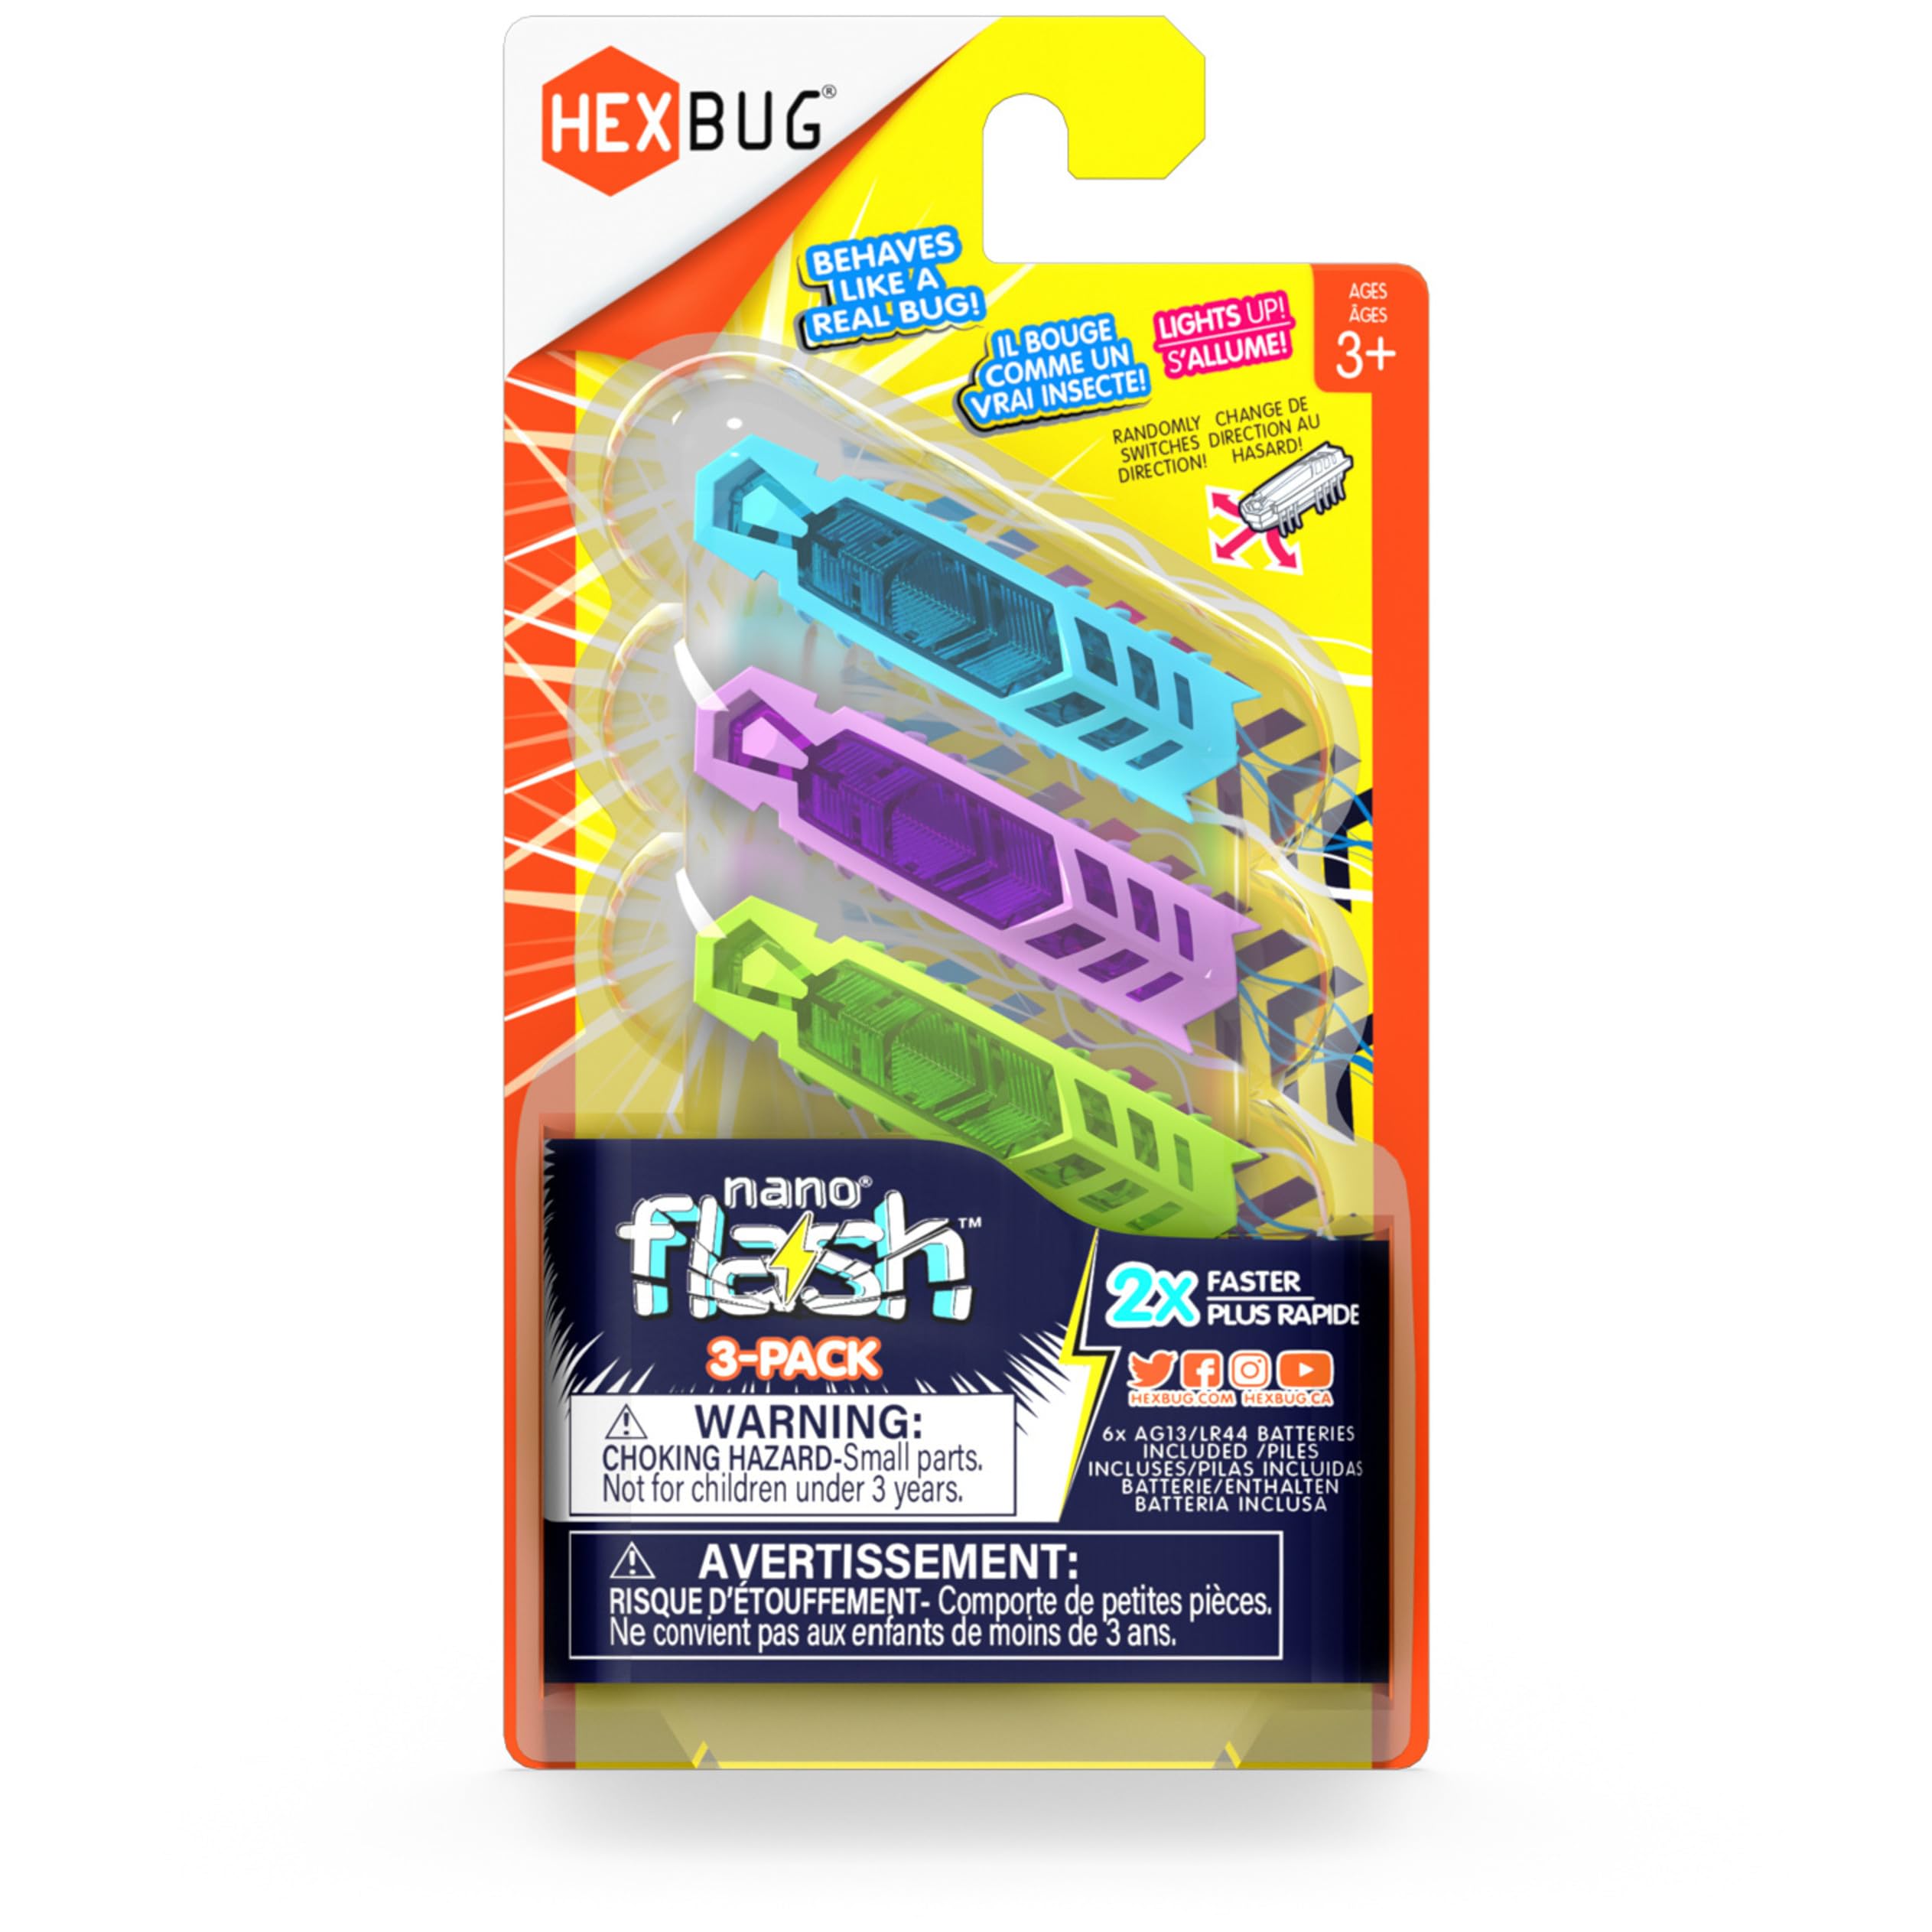 HEXBUG Flash Nano 3-Pack, Light-Up Sensory Toys for Kids & Cats with Vibration Technology, STEM Kits & Mini Robot Toy for Kids Ages 3 & Up